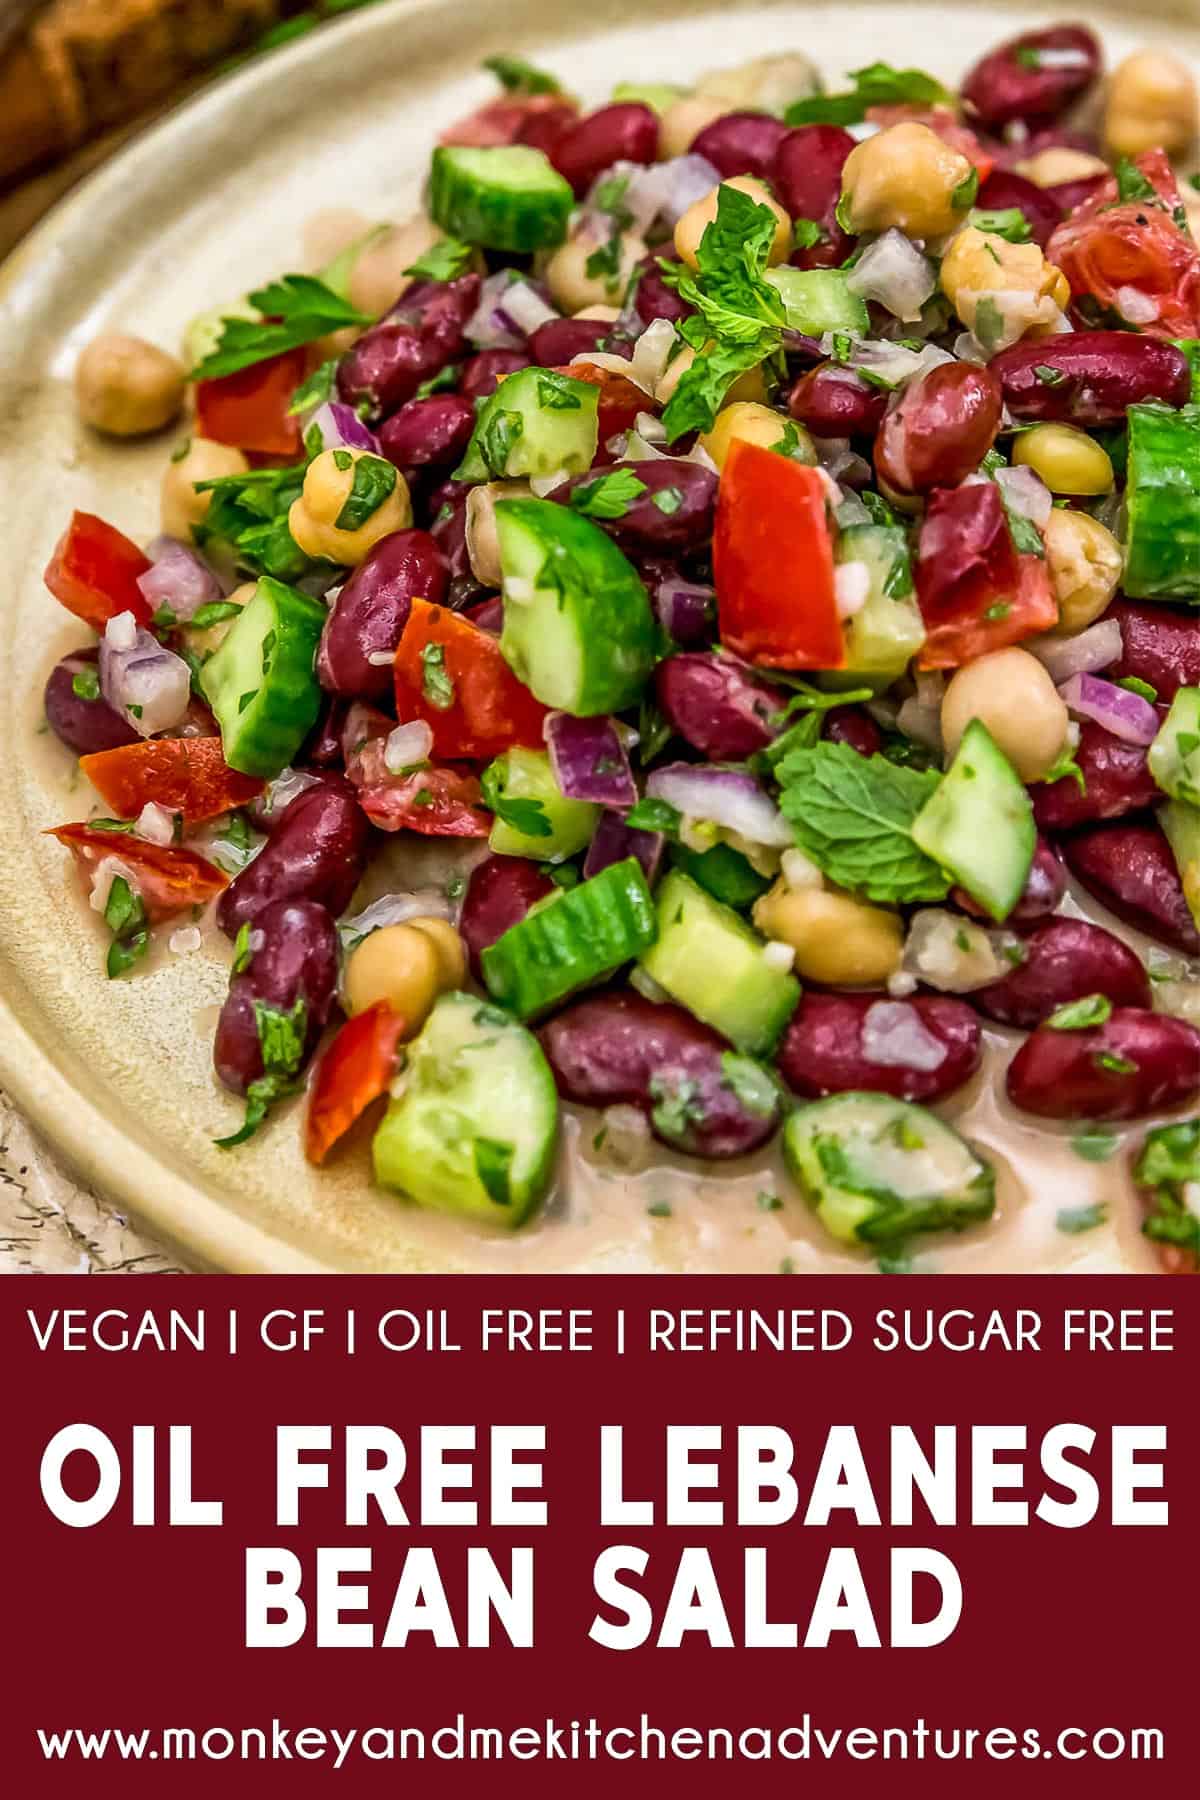 Oil Free Lebanese Bean Salad with text description